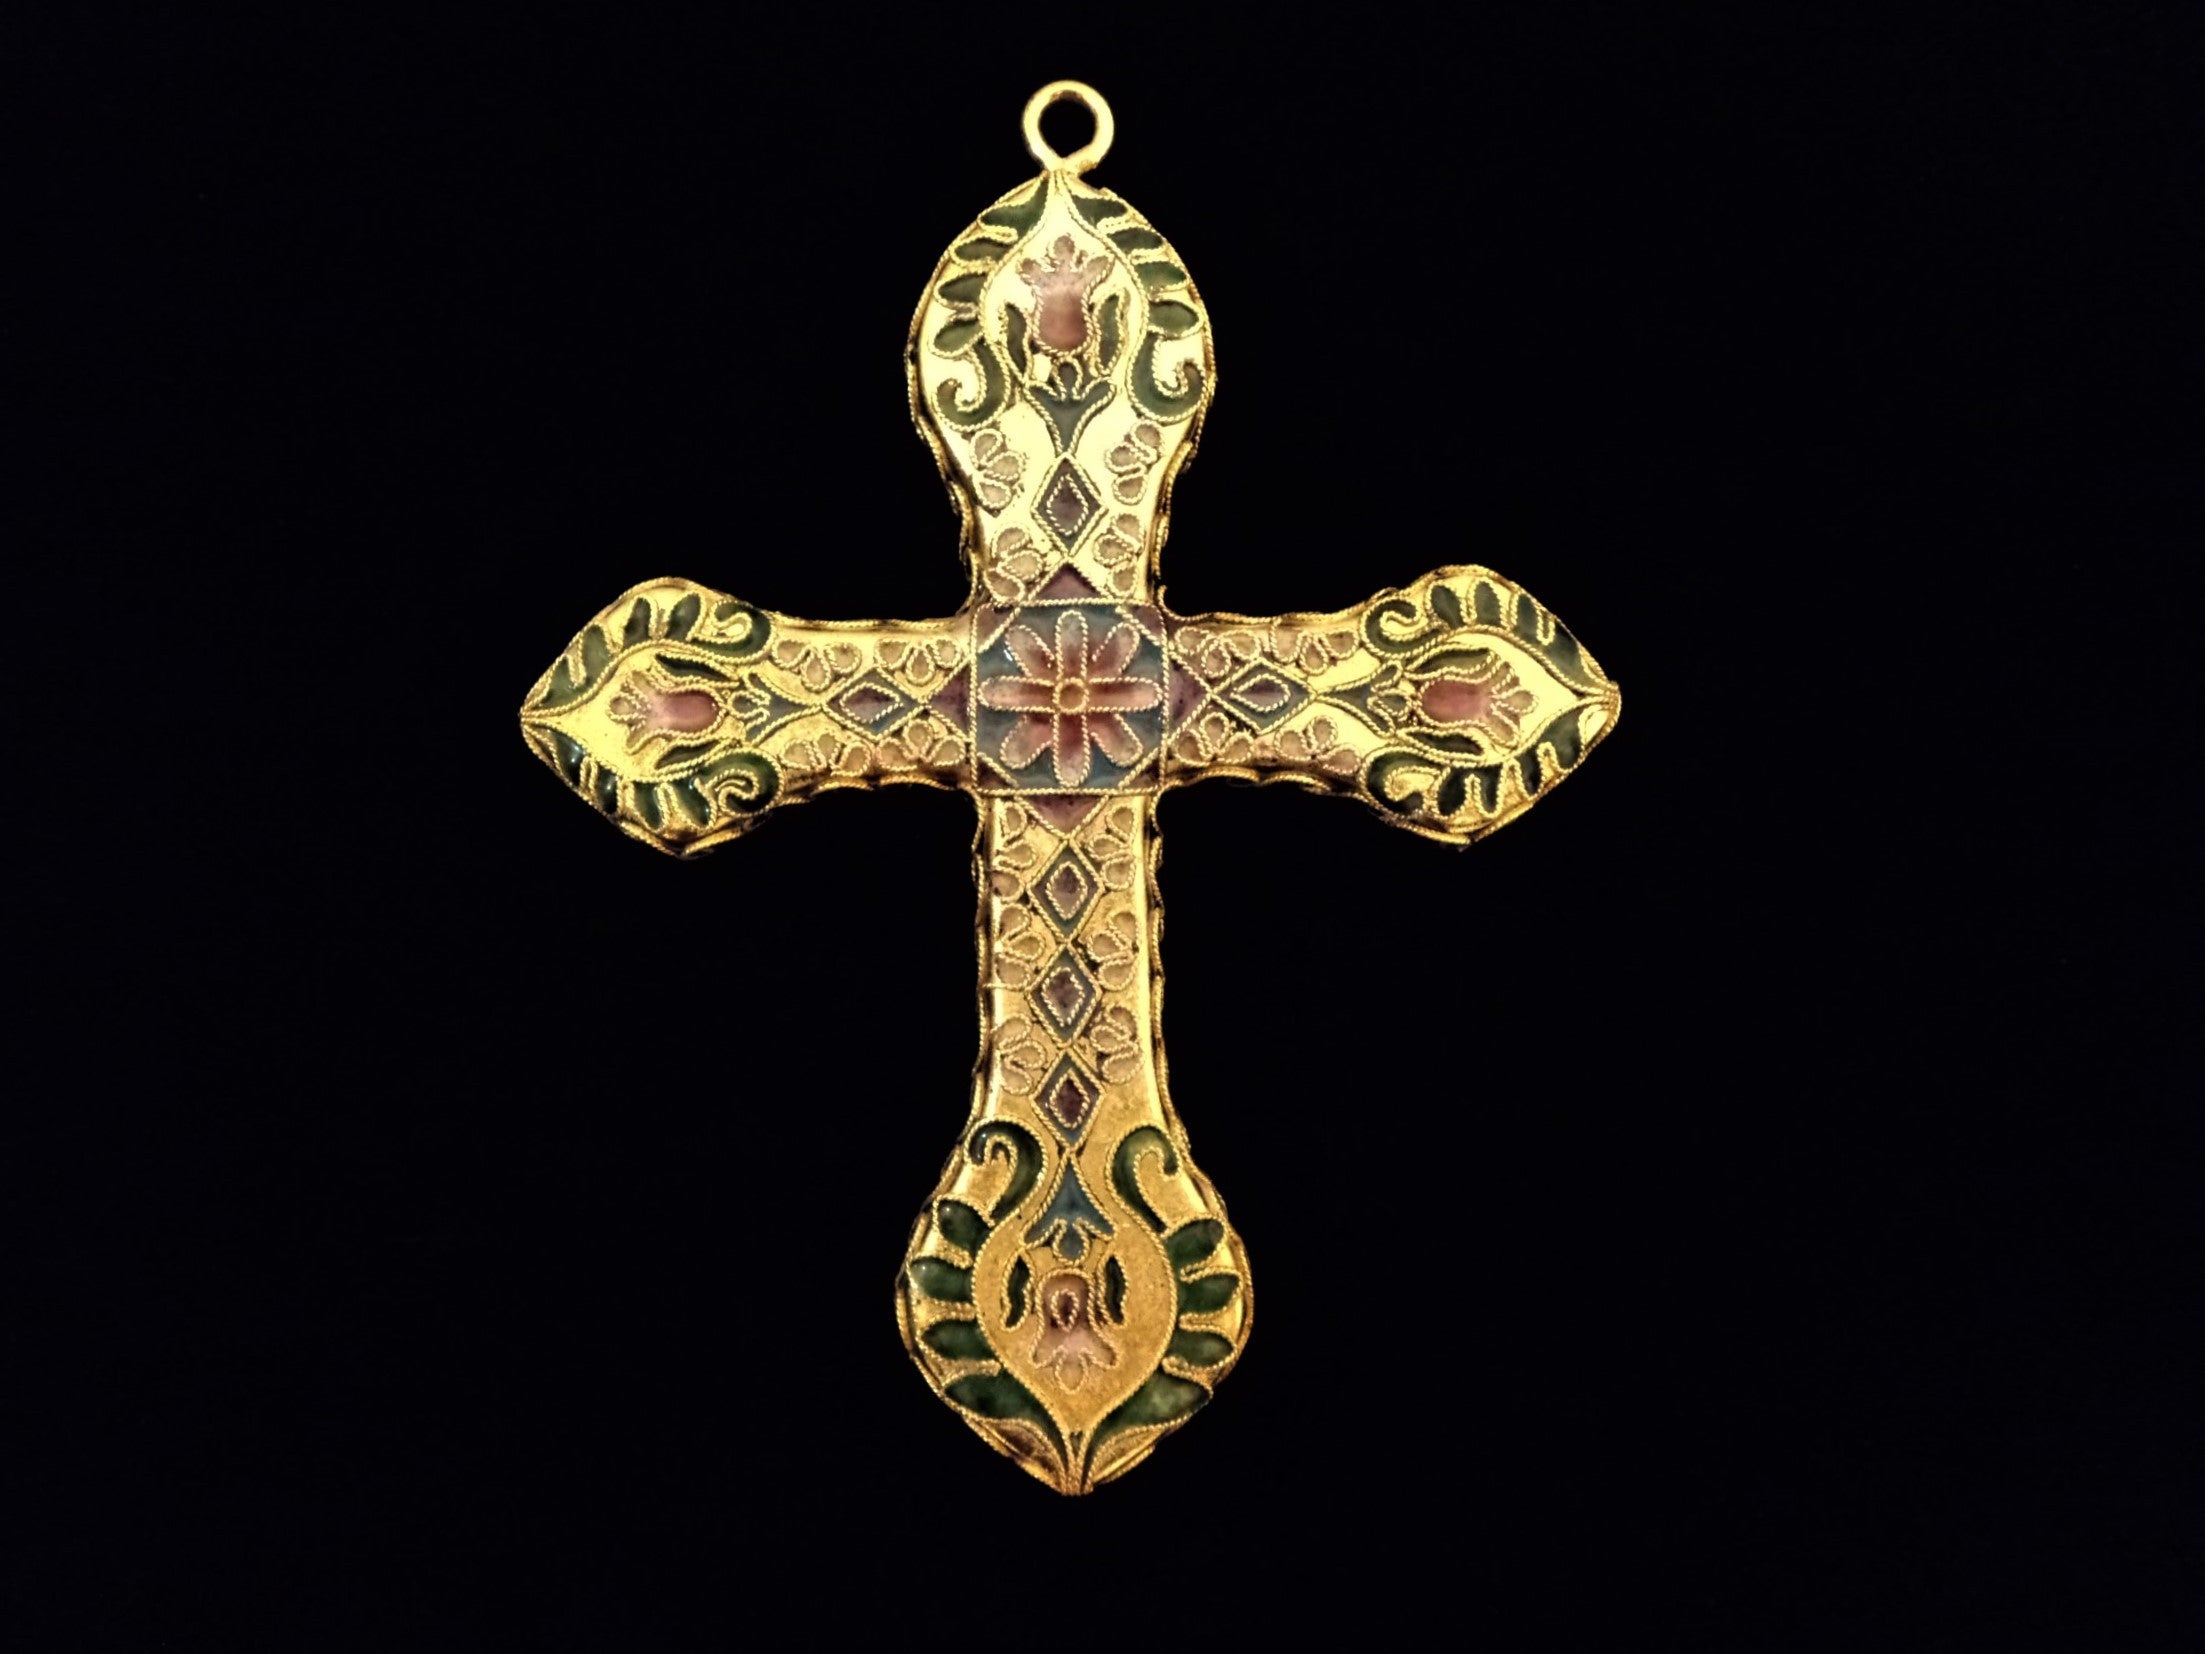 Gold and Green Enamel Cloisonne Cross